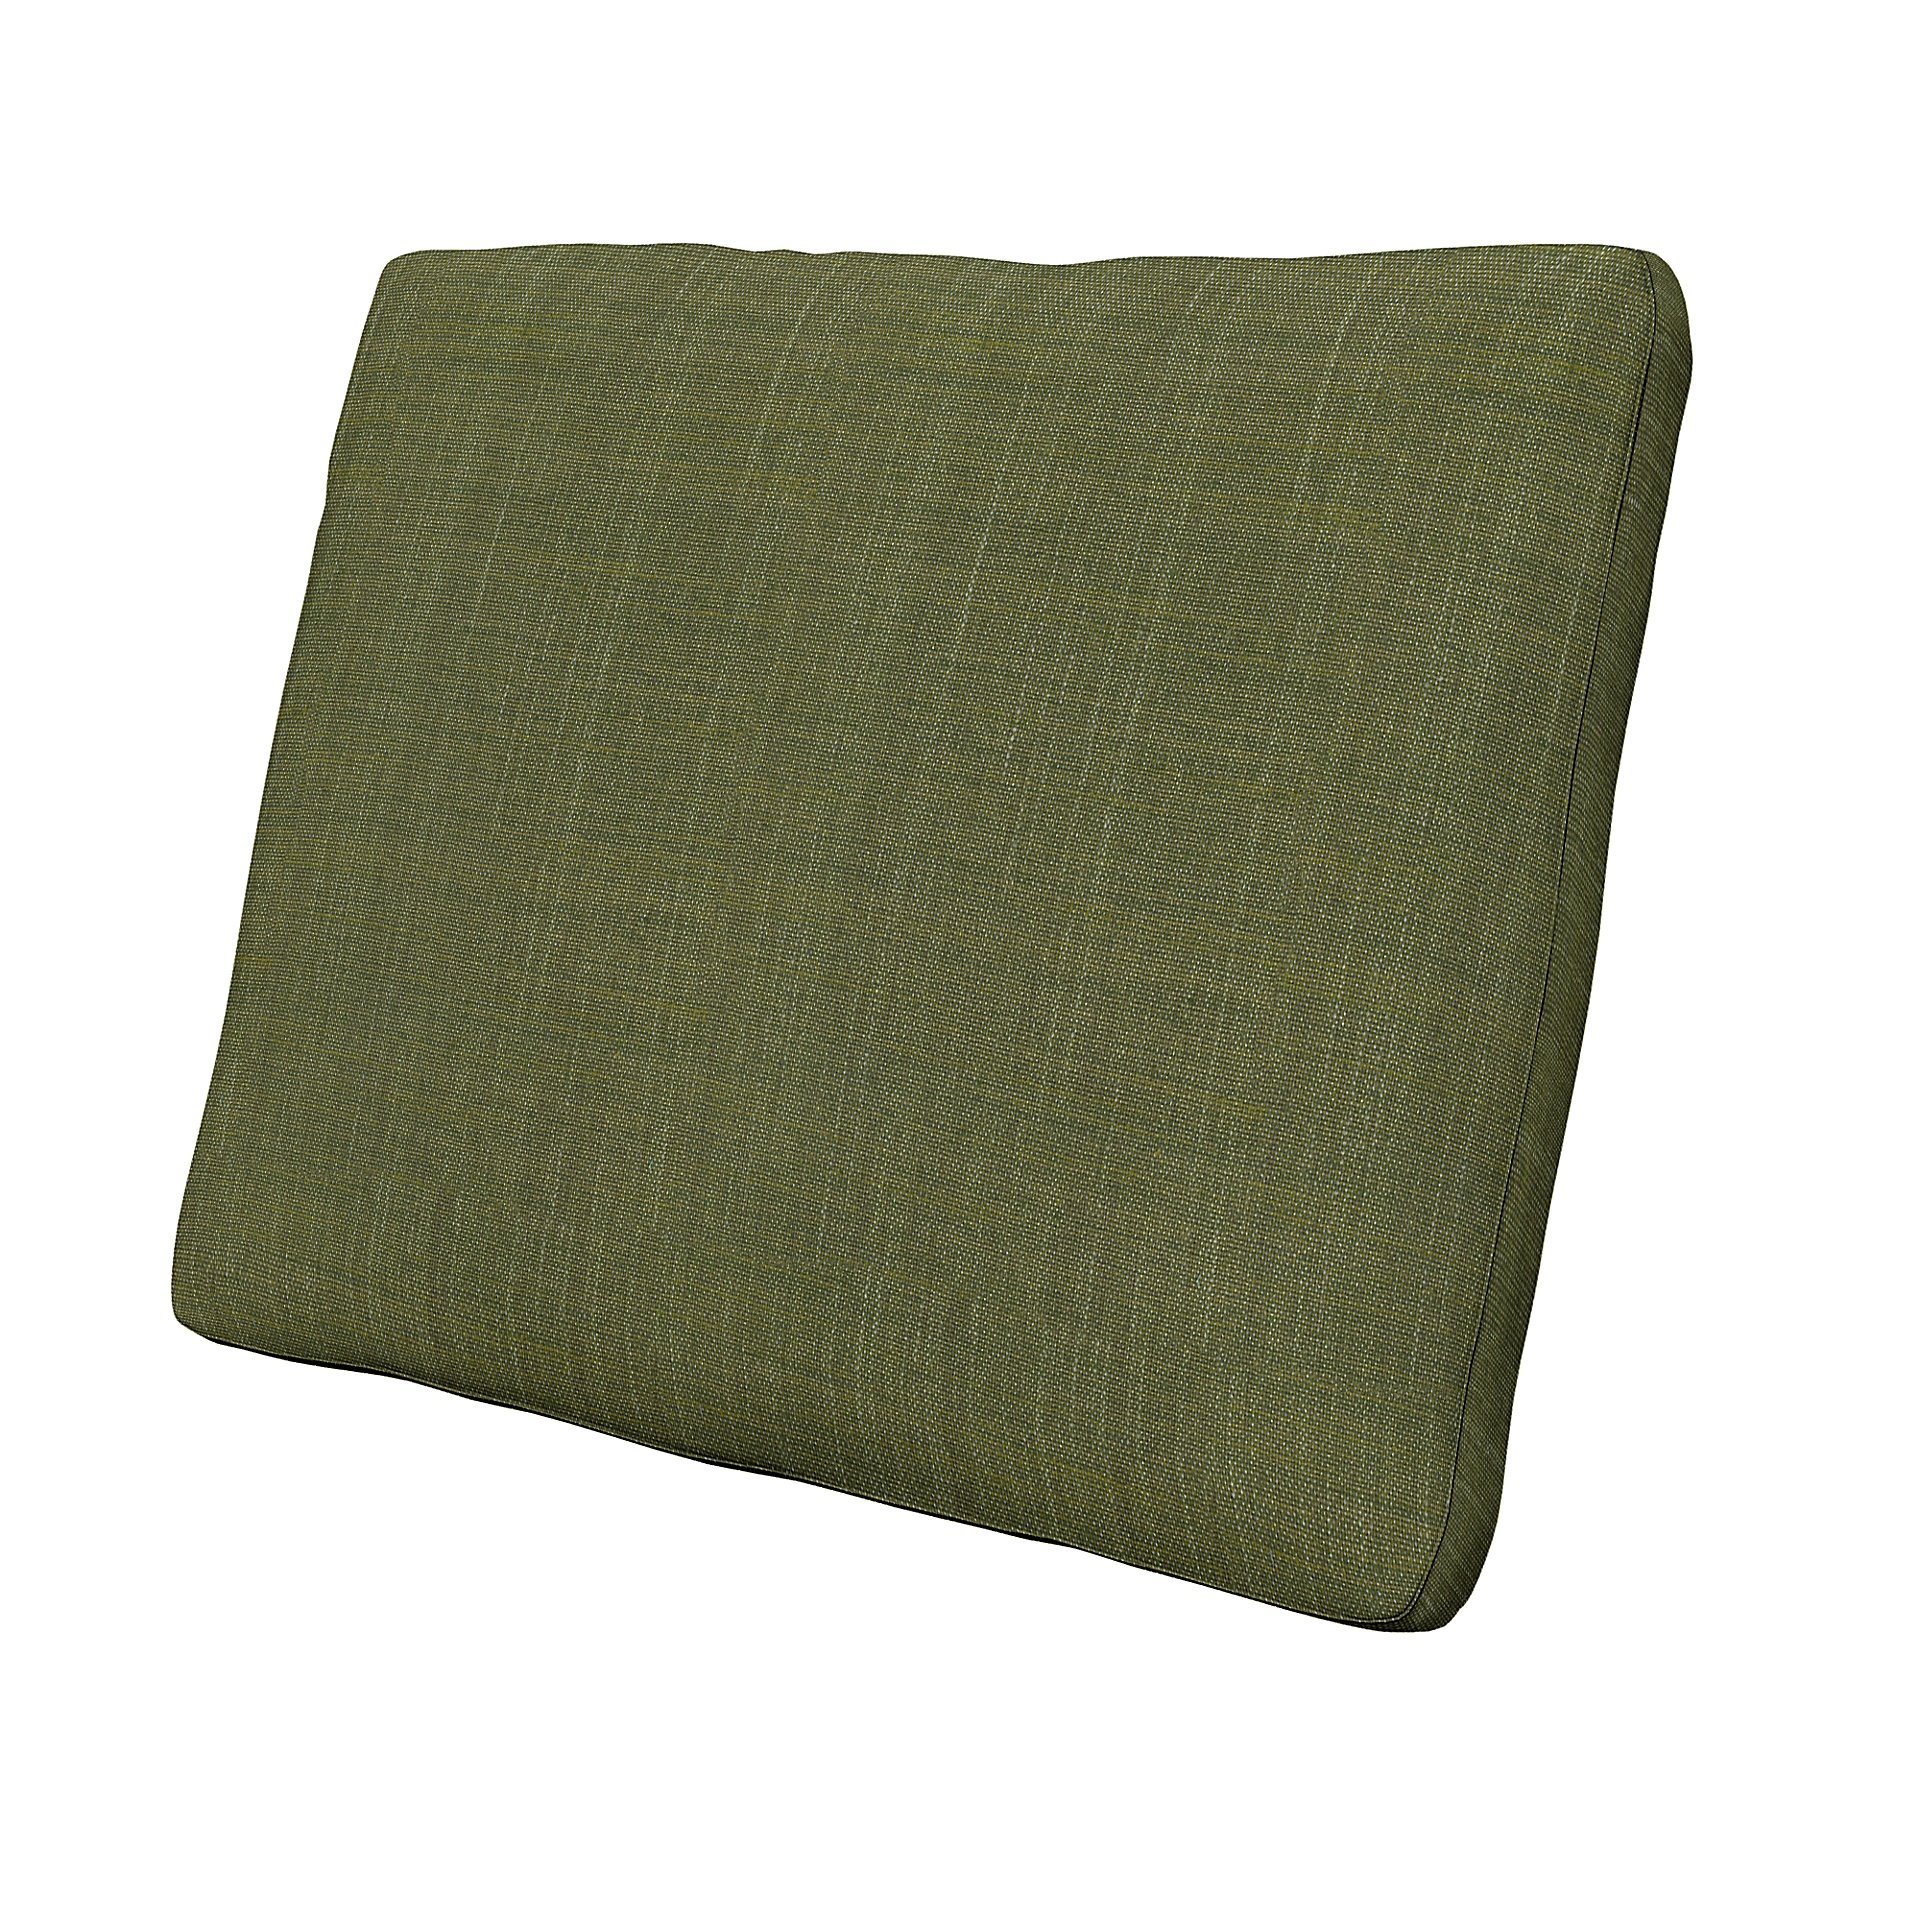 IKEA - Cushion Cover Karlstad 58x48x5 cm, Moss Green, Boucle & Texture - Bemz